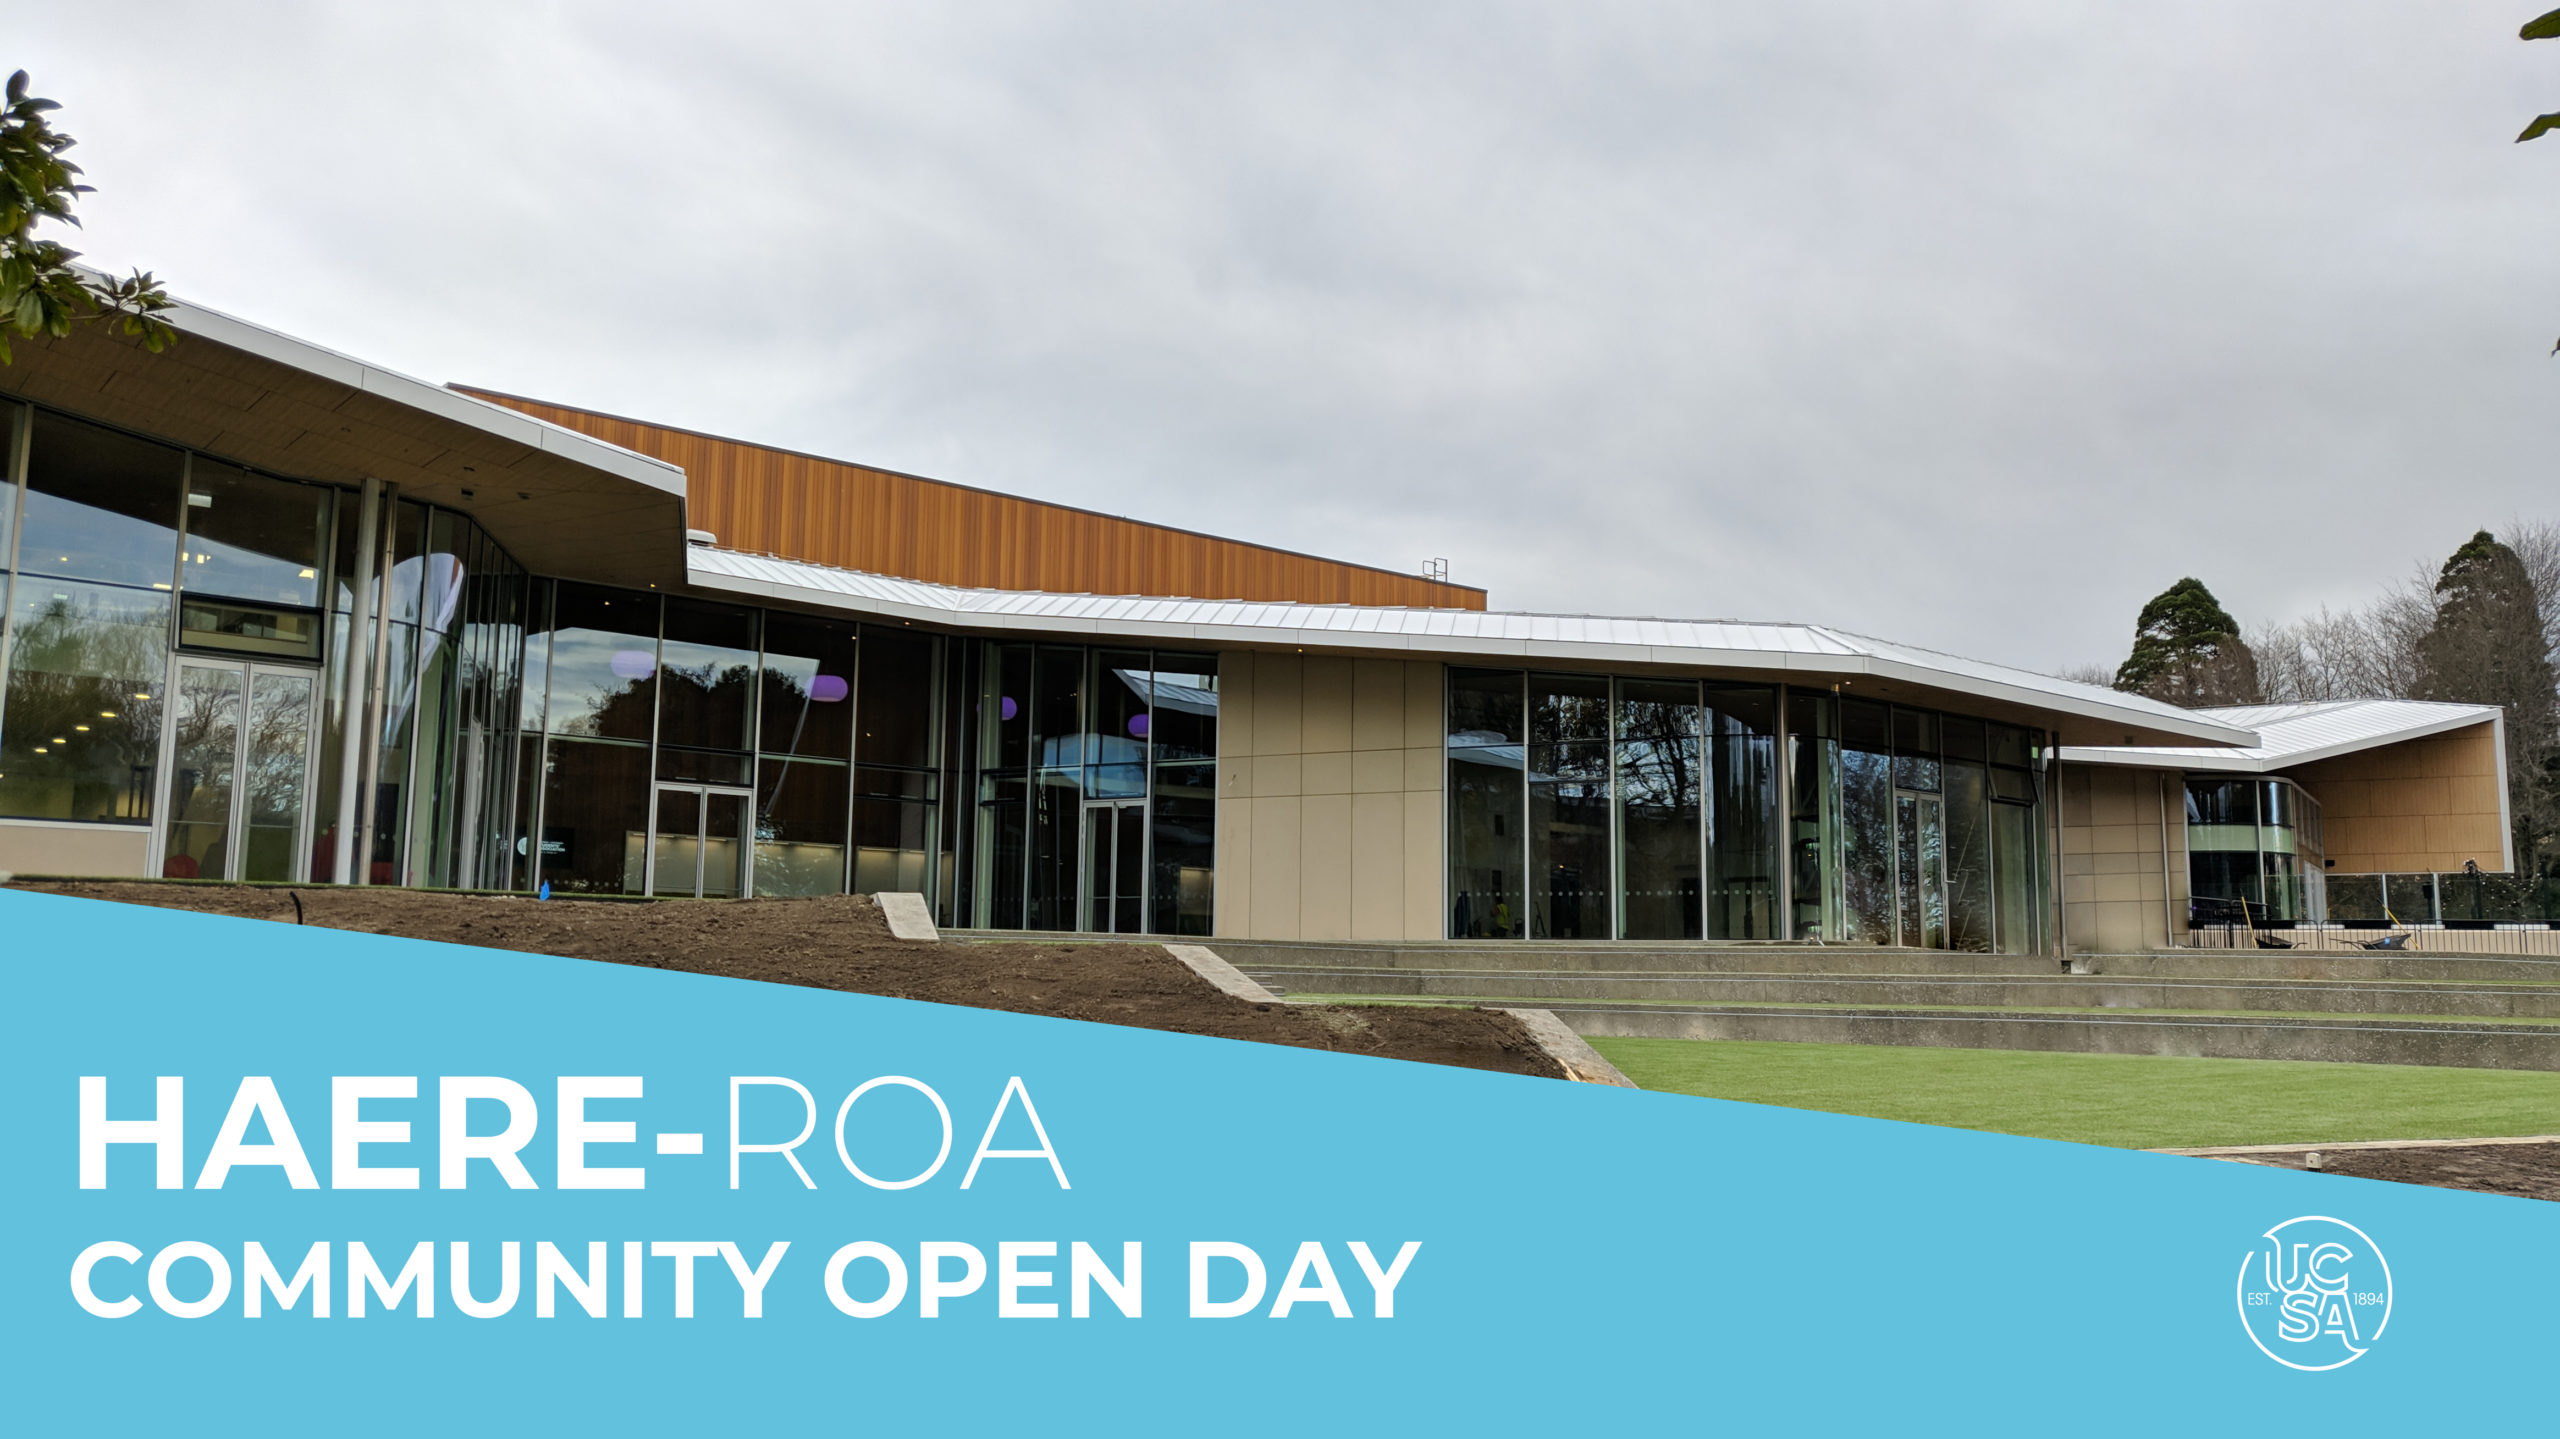 Haere-roa Community Open Day